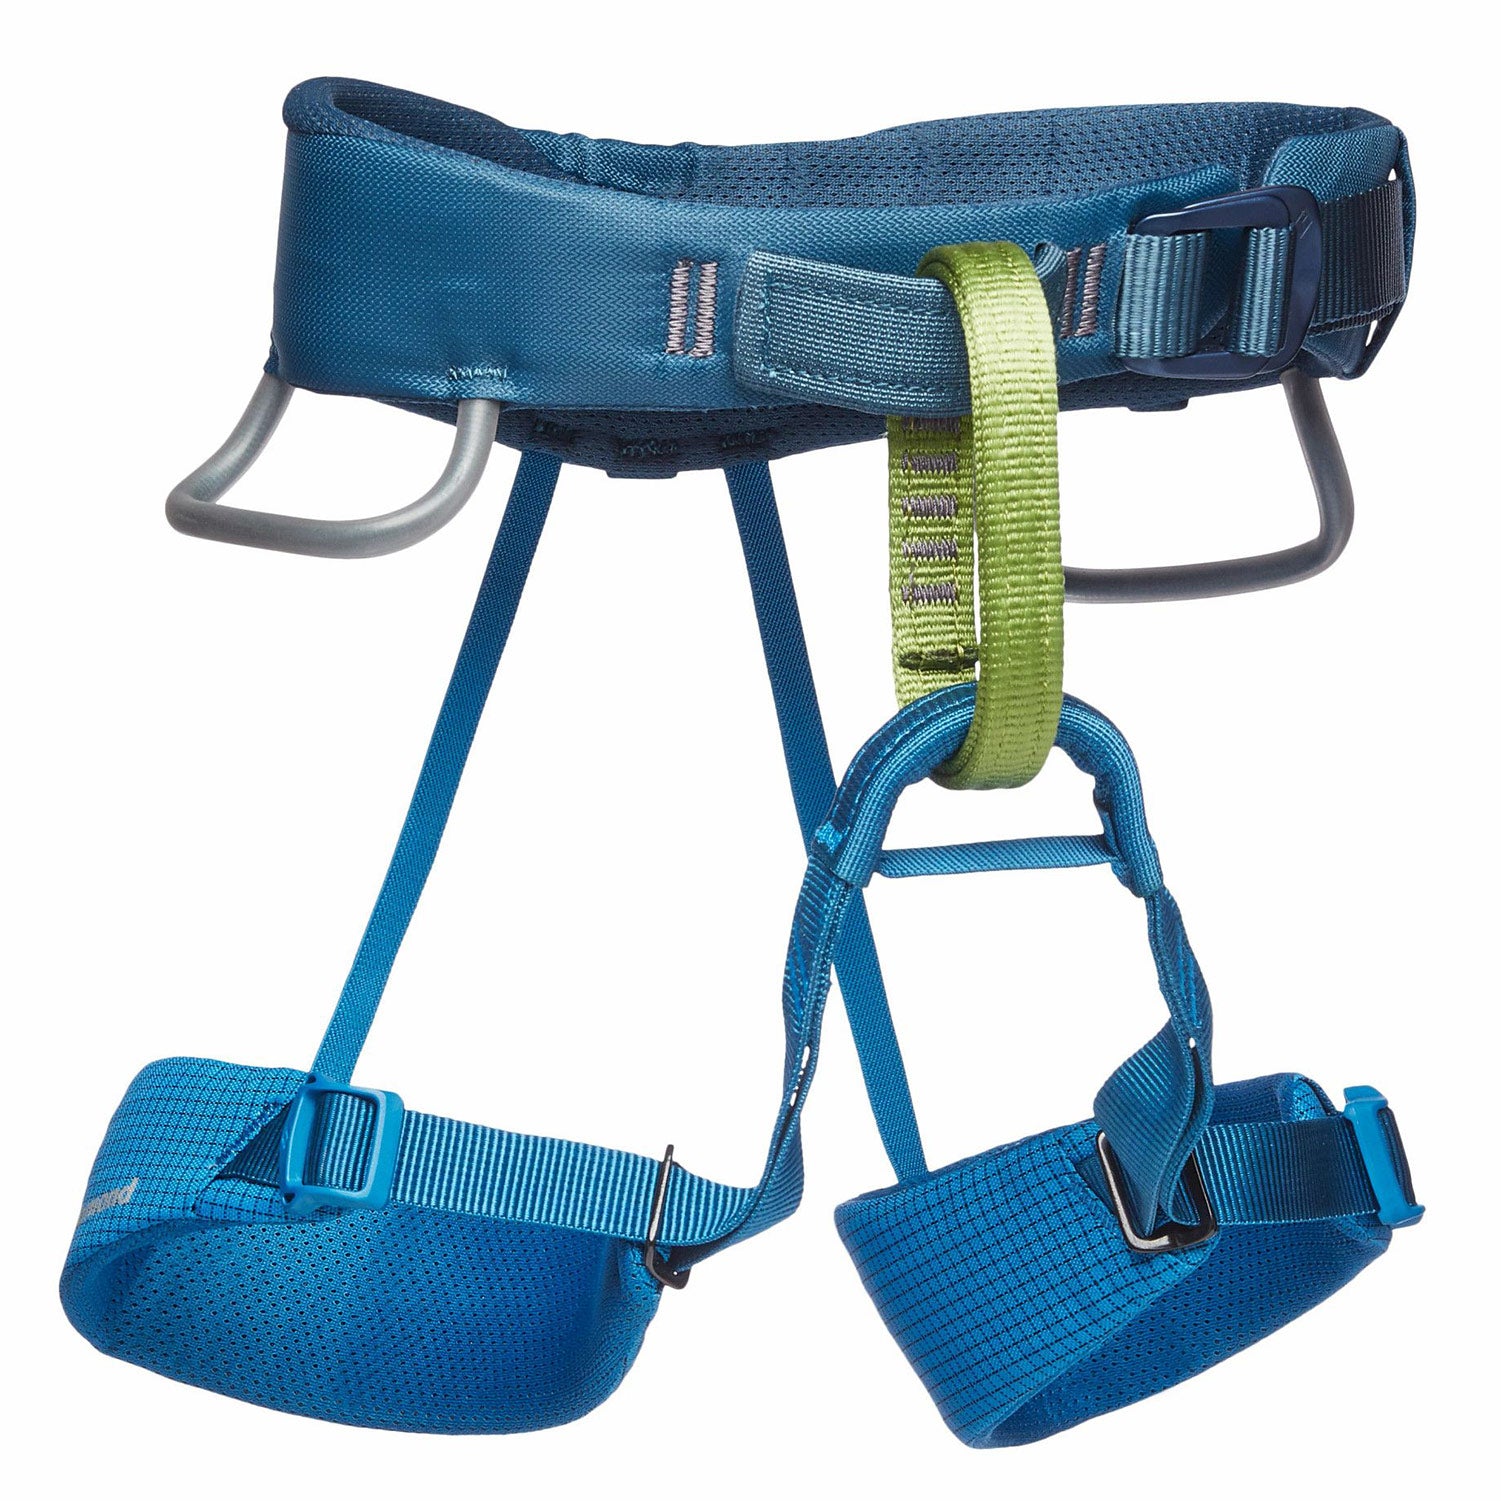 a blue kid's climbing harness